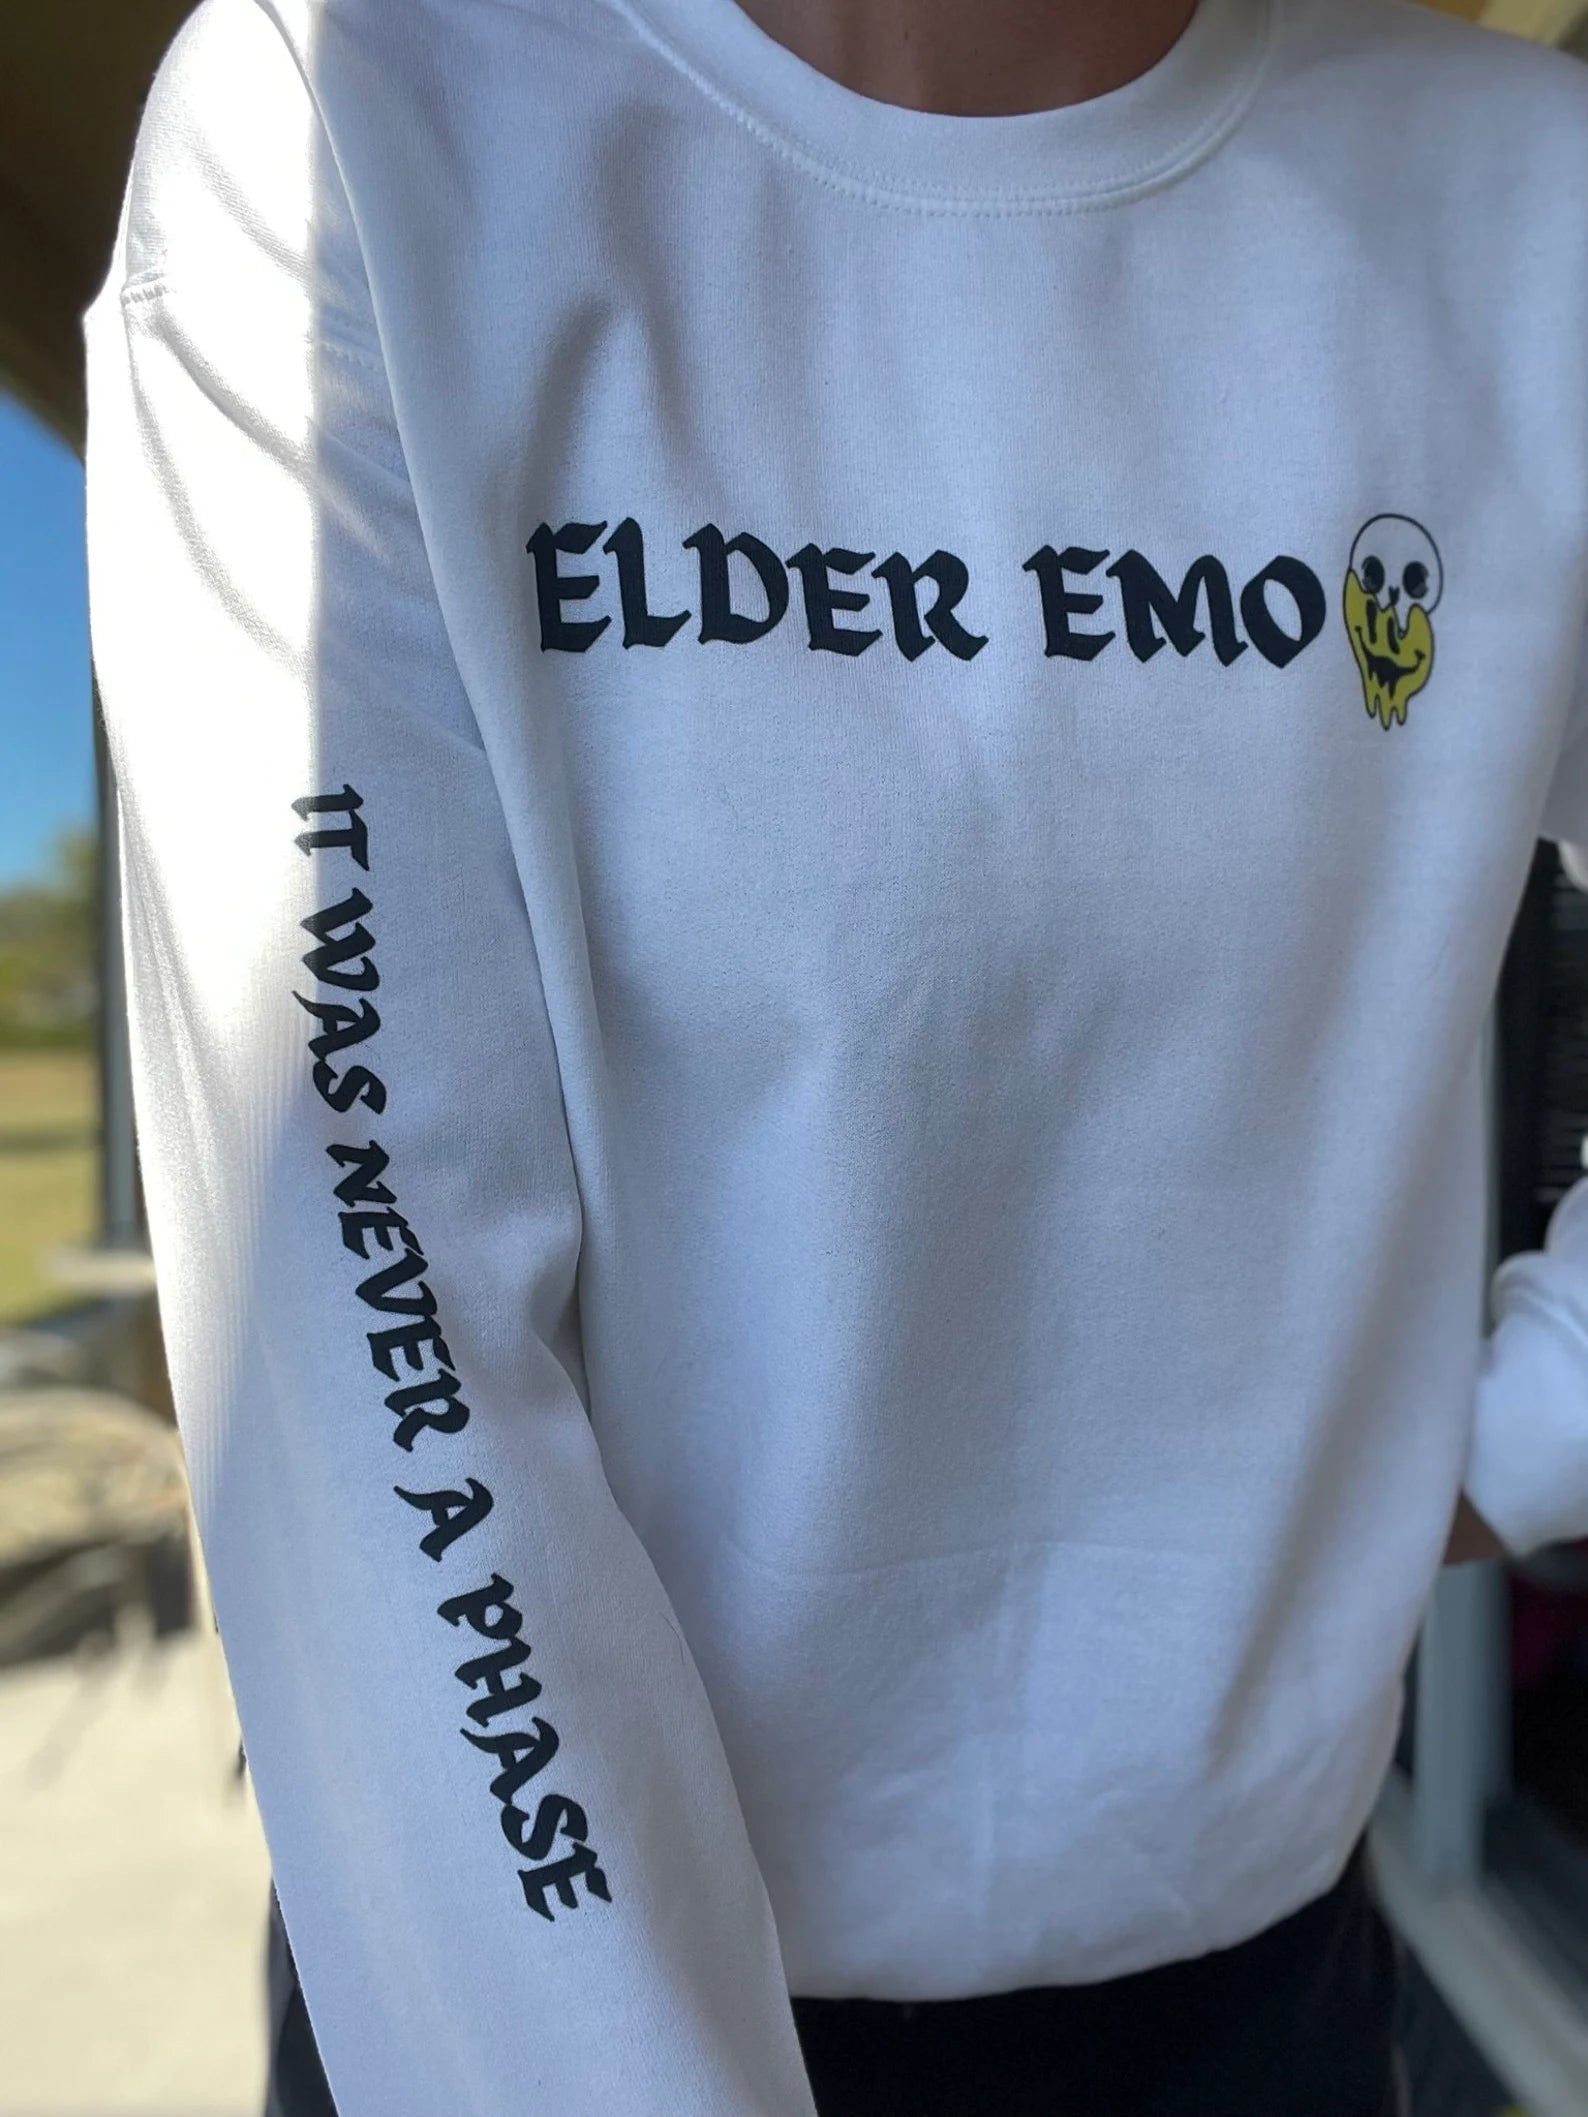 Elder Emo Sweatshirt, Elder Emo Shirt, Mood Apathetic, Emo